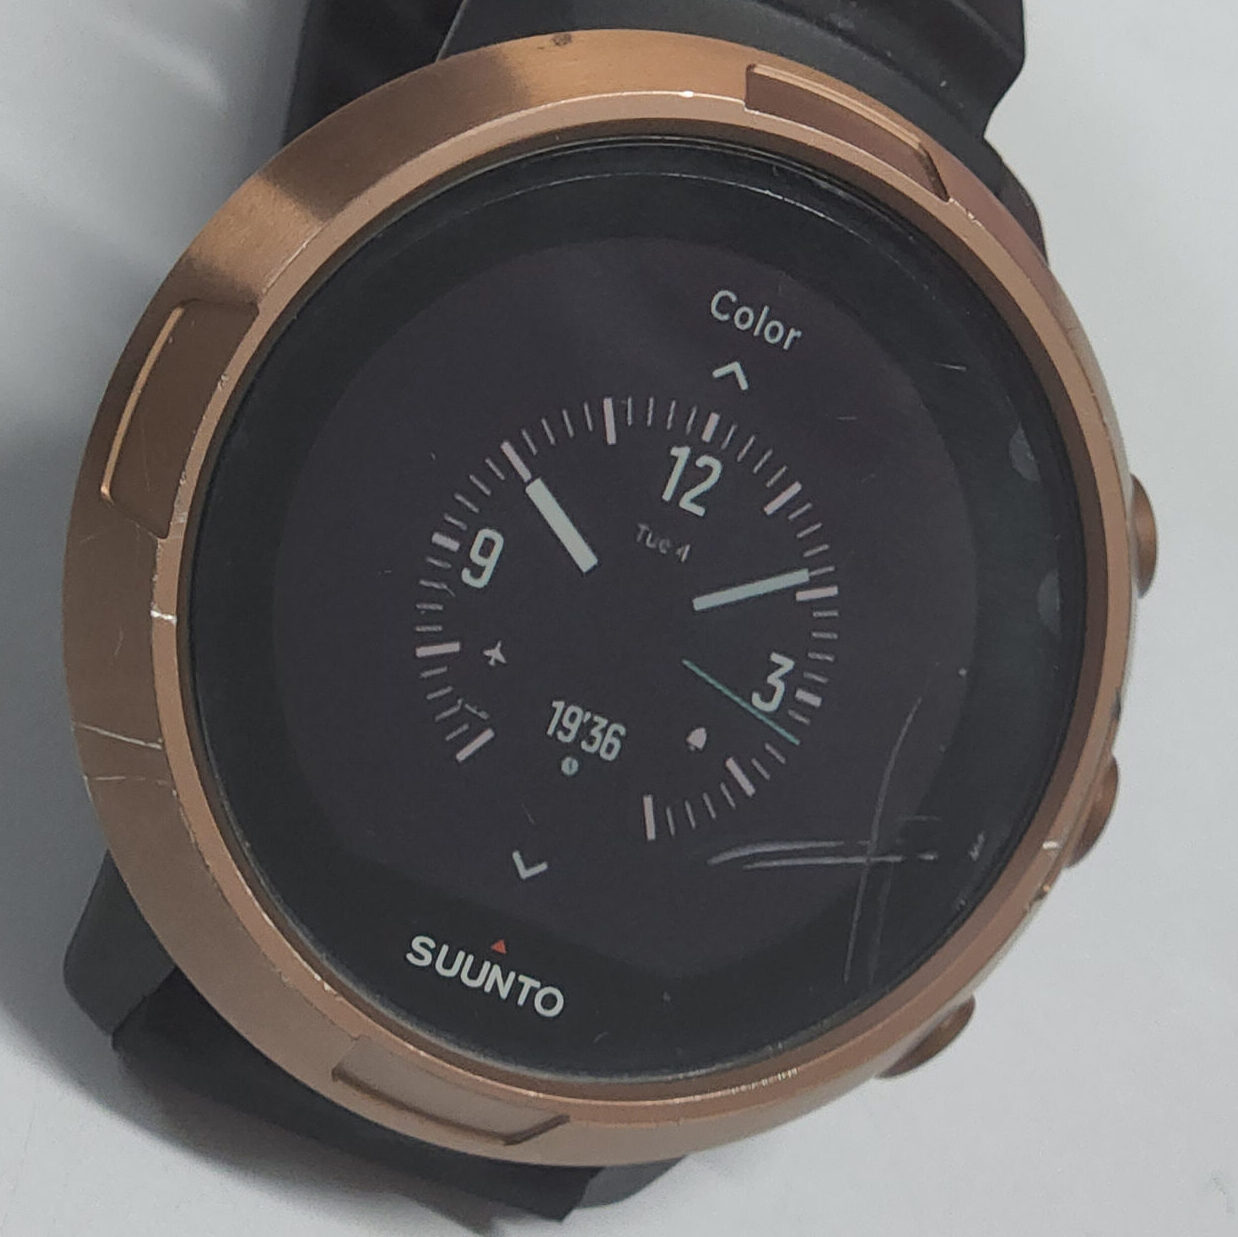 Suunto d5 update 2022 - new watch face